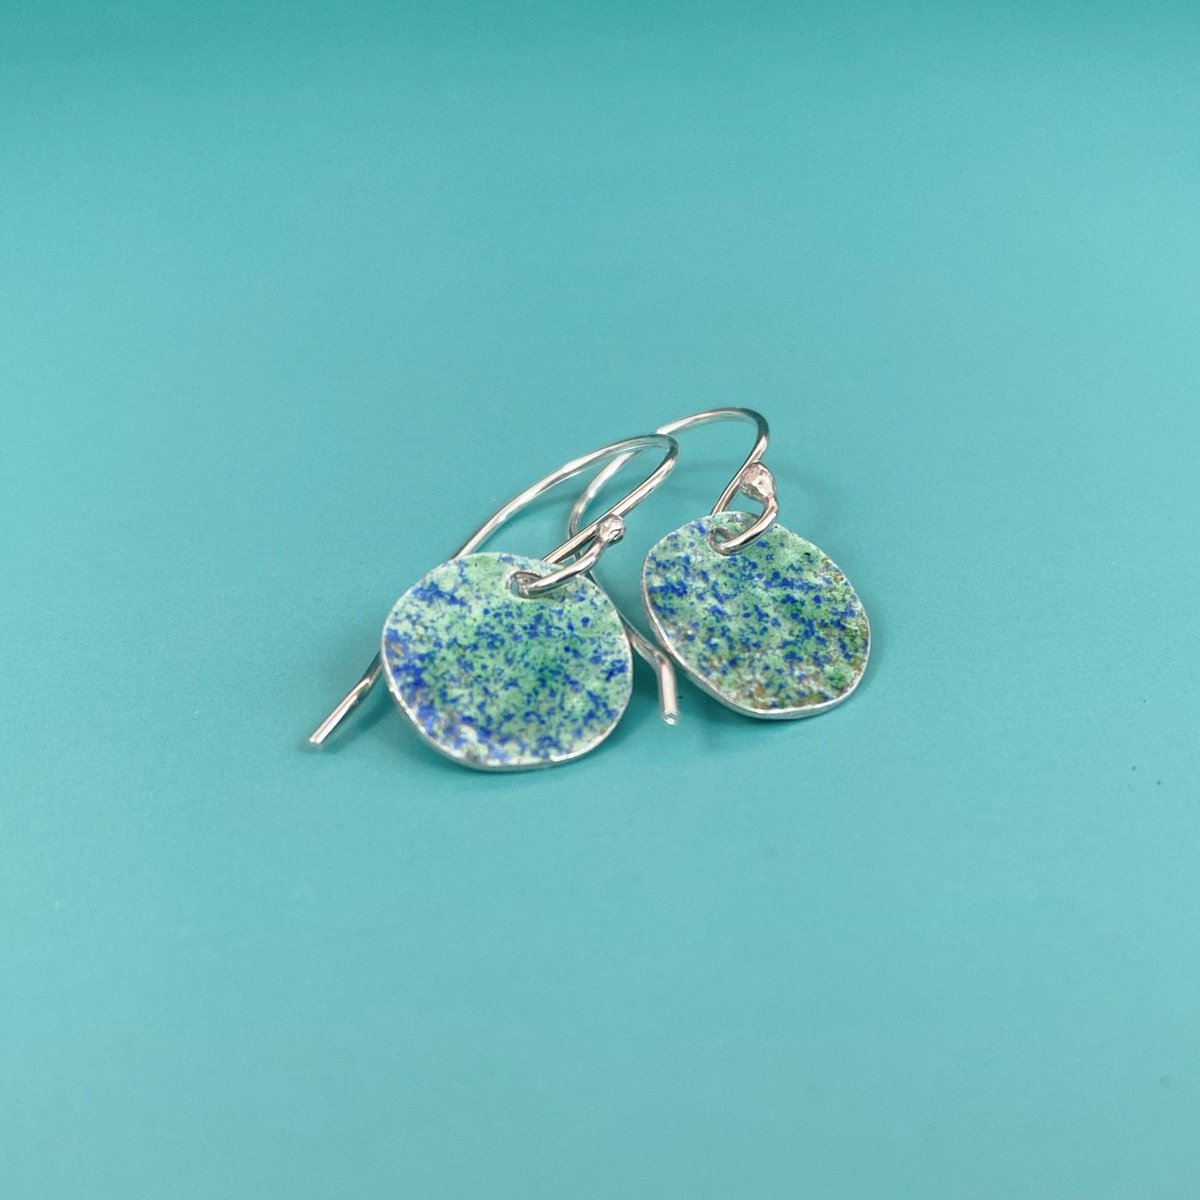 Sea Spirit Earrings tuppu.net/618142a4 #bizbubble #giftideas #UKHashtags #HandmadeHour #MHHSBD ##UKGiftHour #shopsmall #inbizhour #DropEarrings